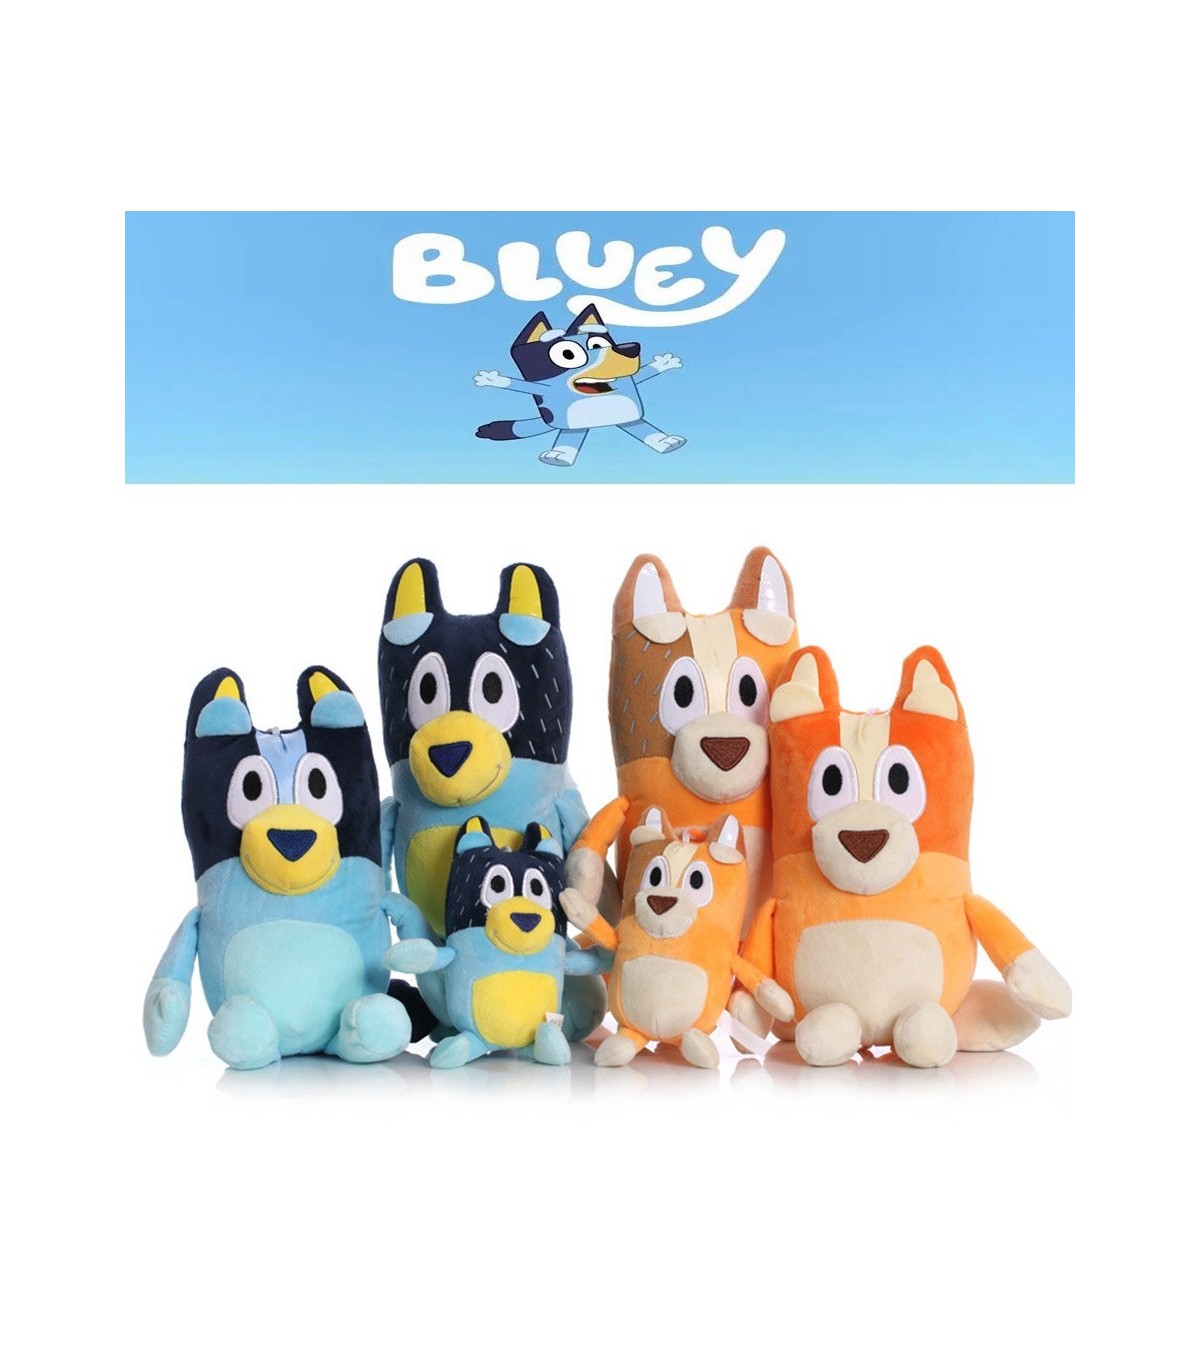 Bluey y Bingo Dog Friends Peluche de 28 cm Muñeco de peluche